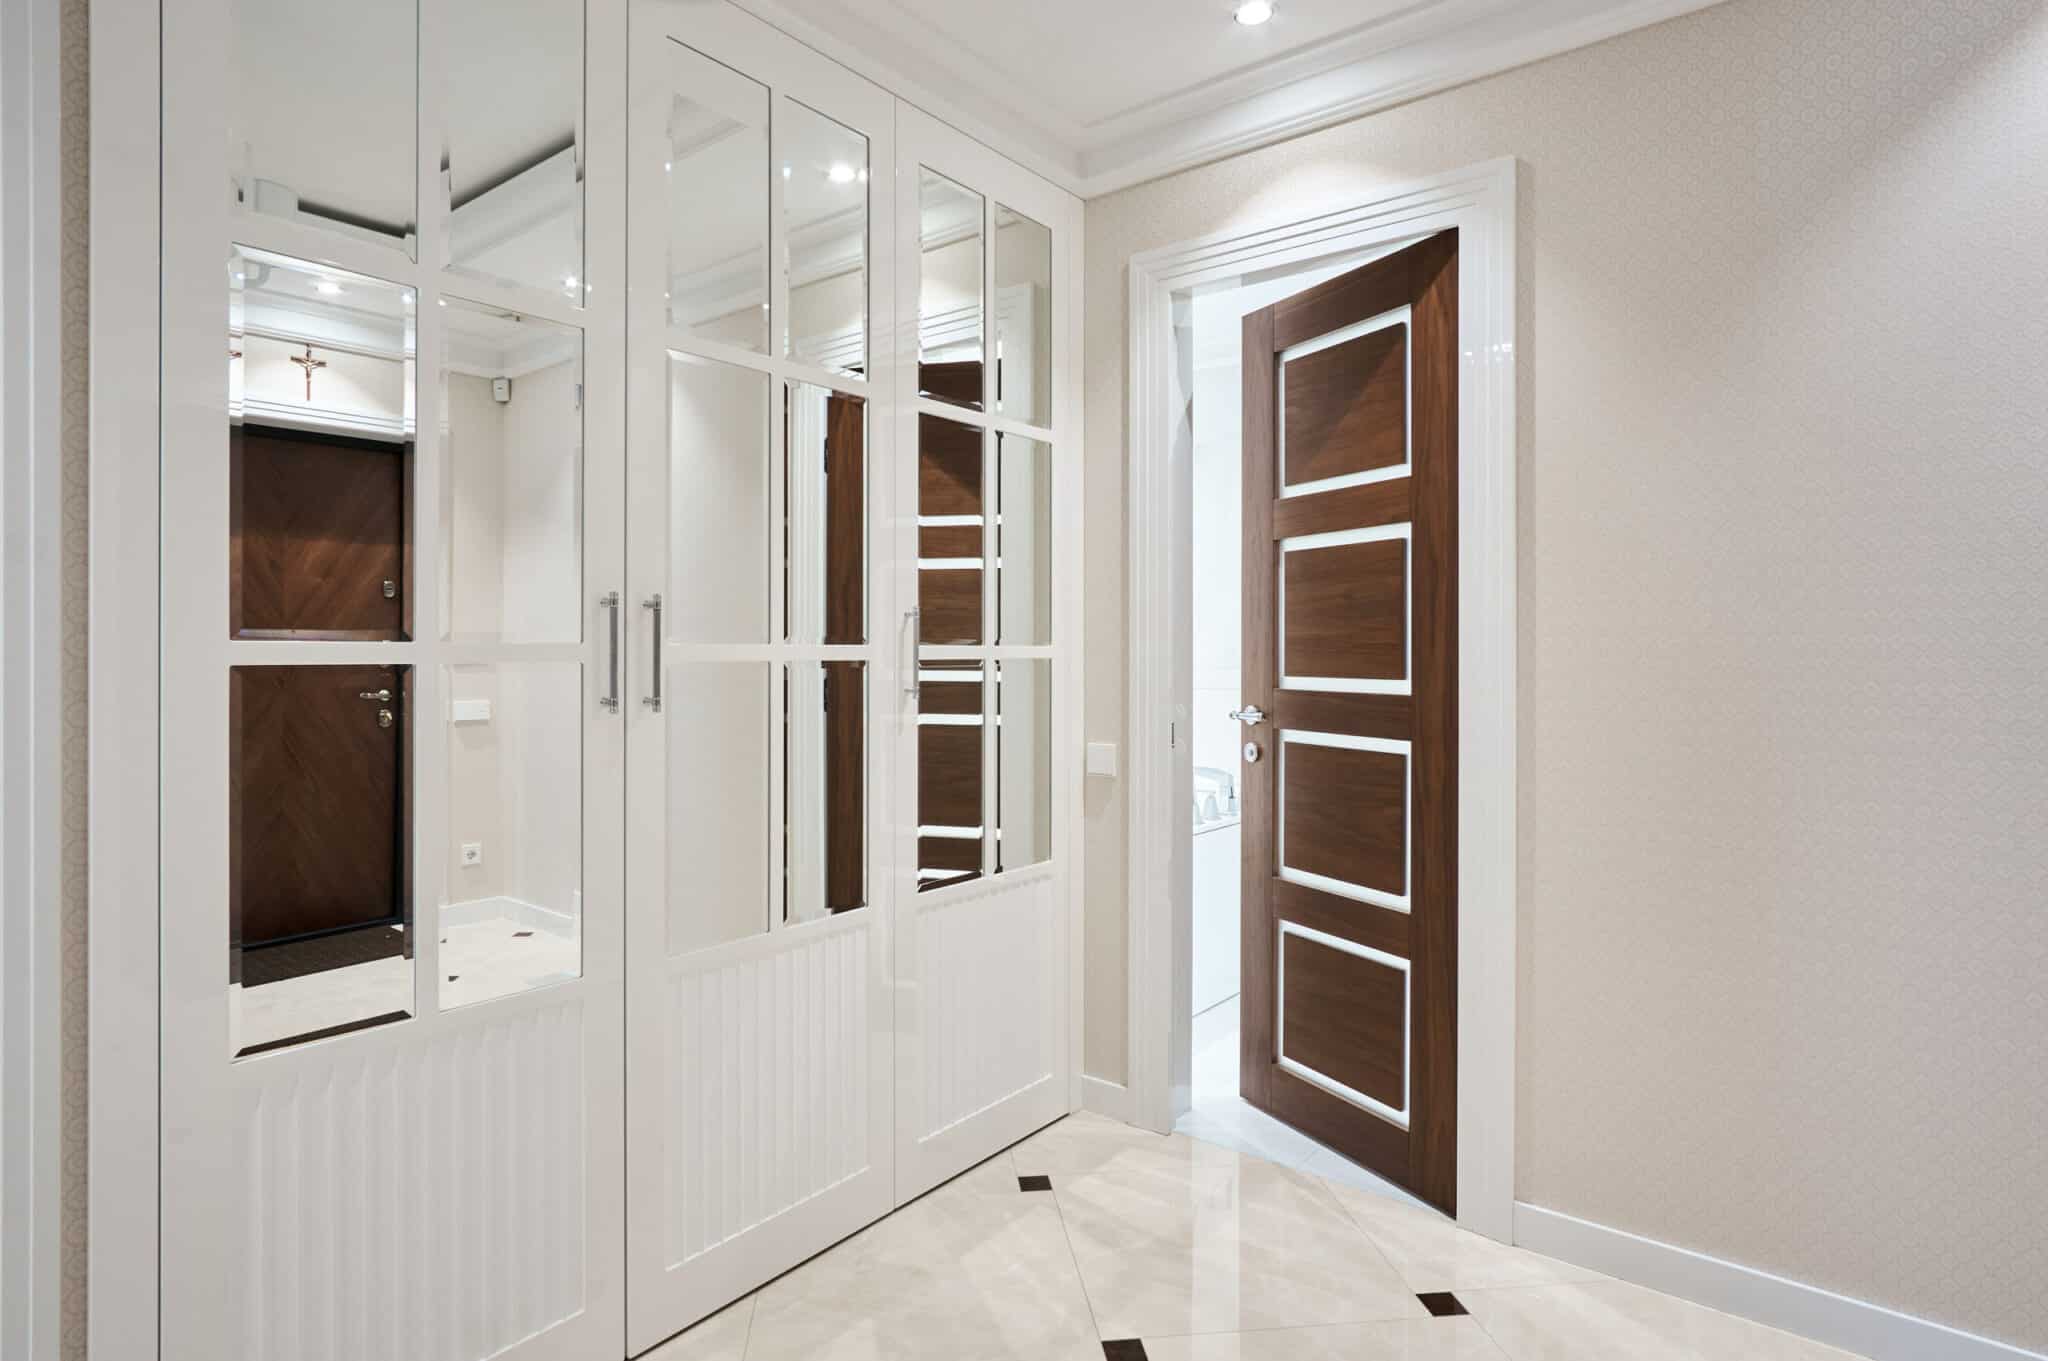 >Hallway closet doors with mirrored panels.